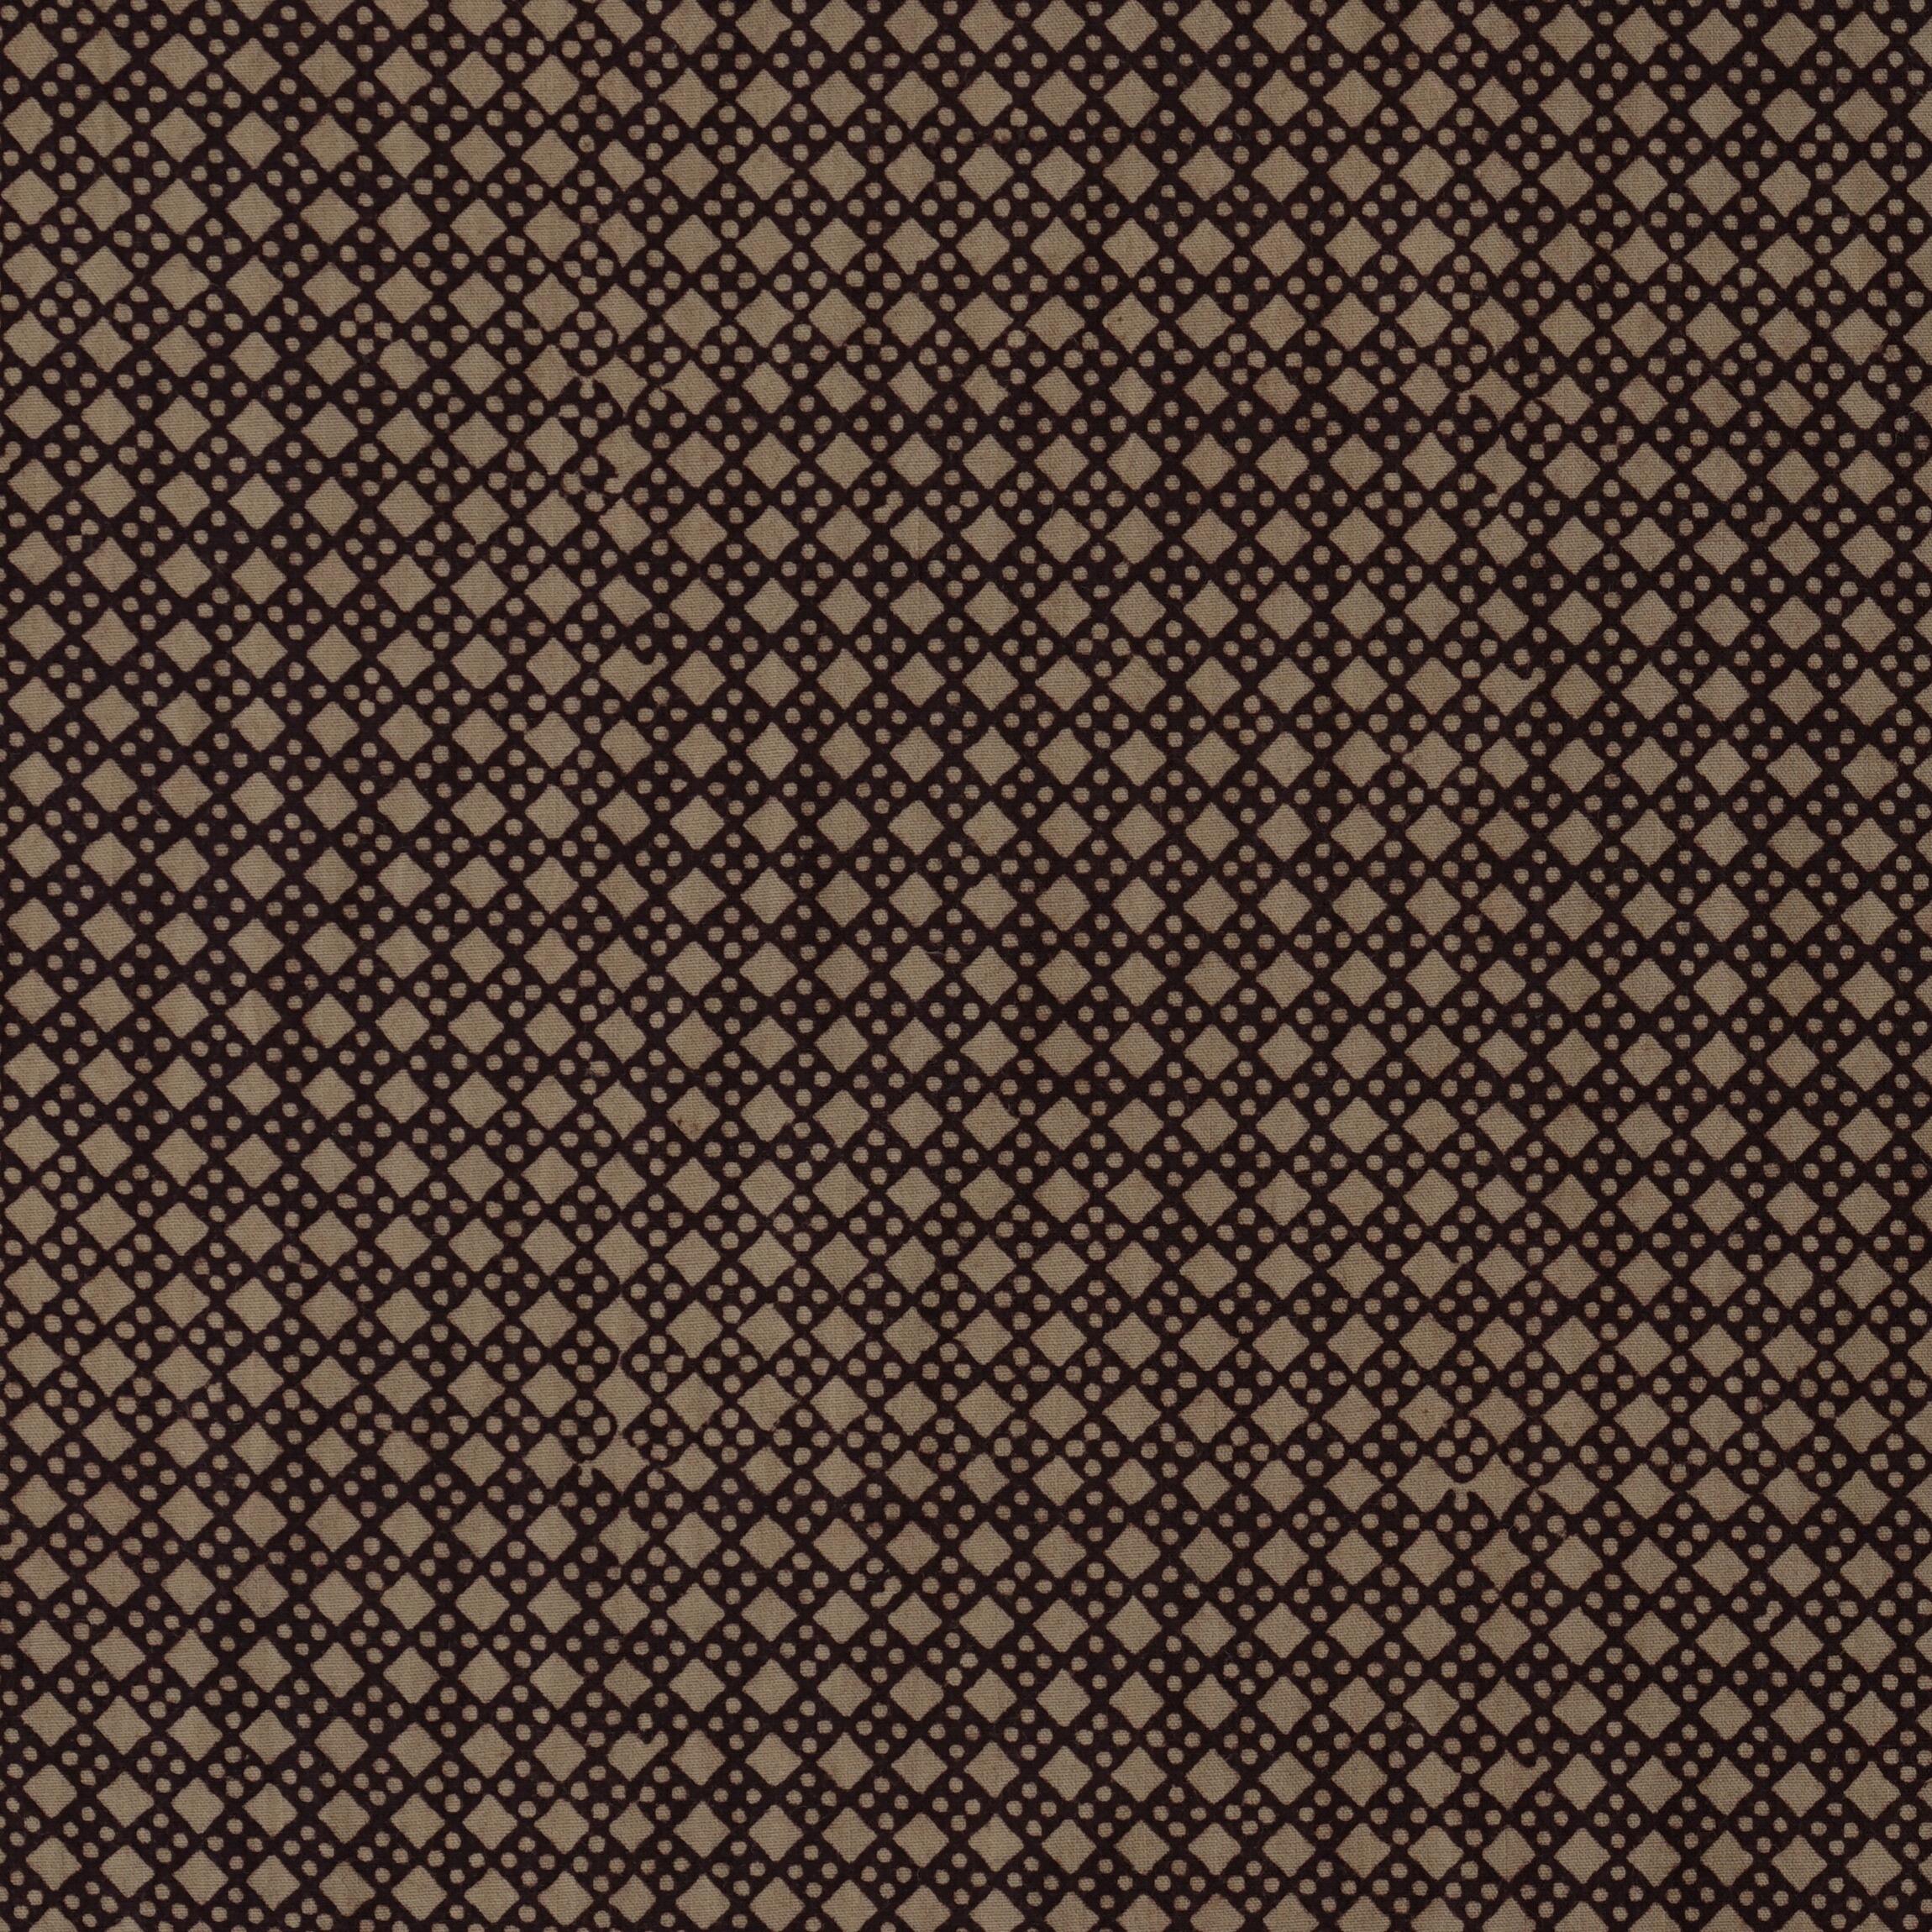 100% Block-Printed Cotton Fabric From India - Bagh Method - Iron Rust Black & Indigosol Khaki - Pressure Point Print - Flat